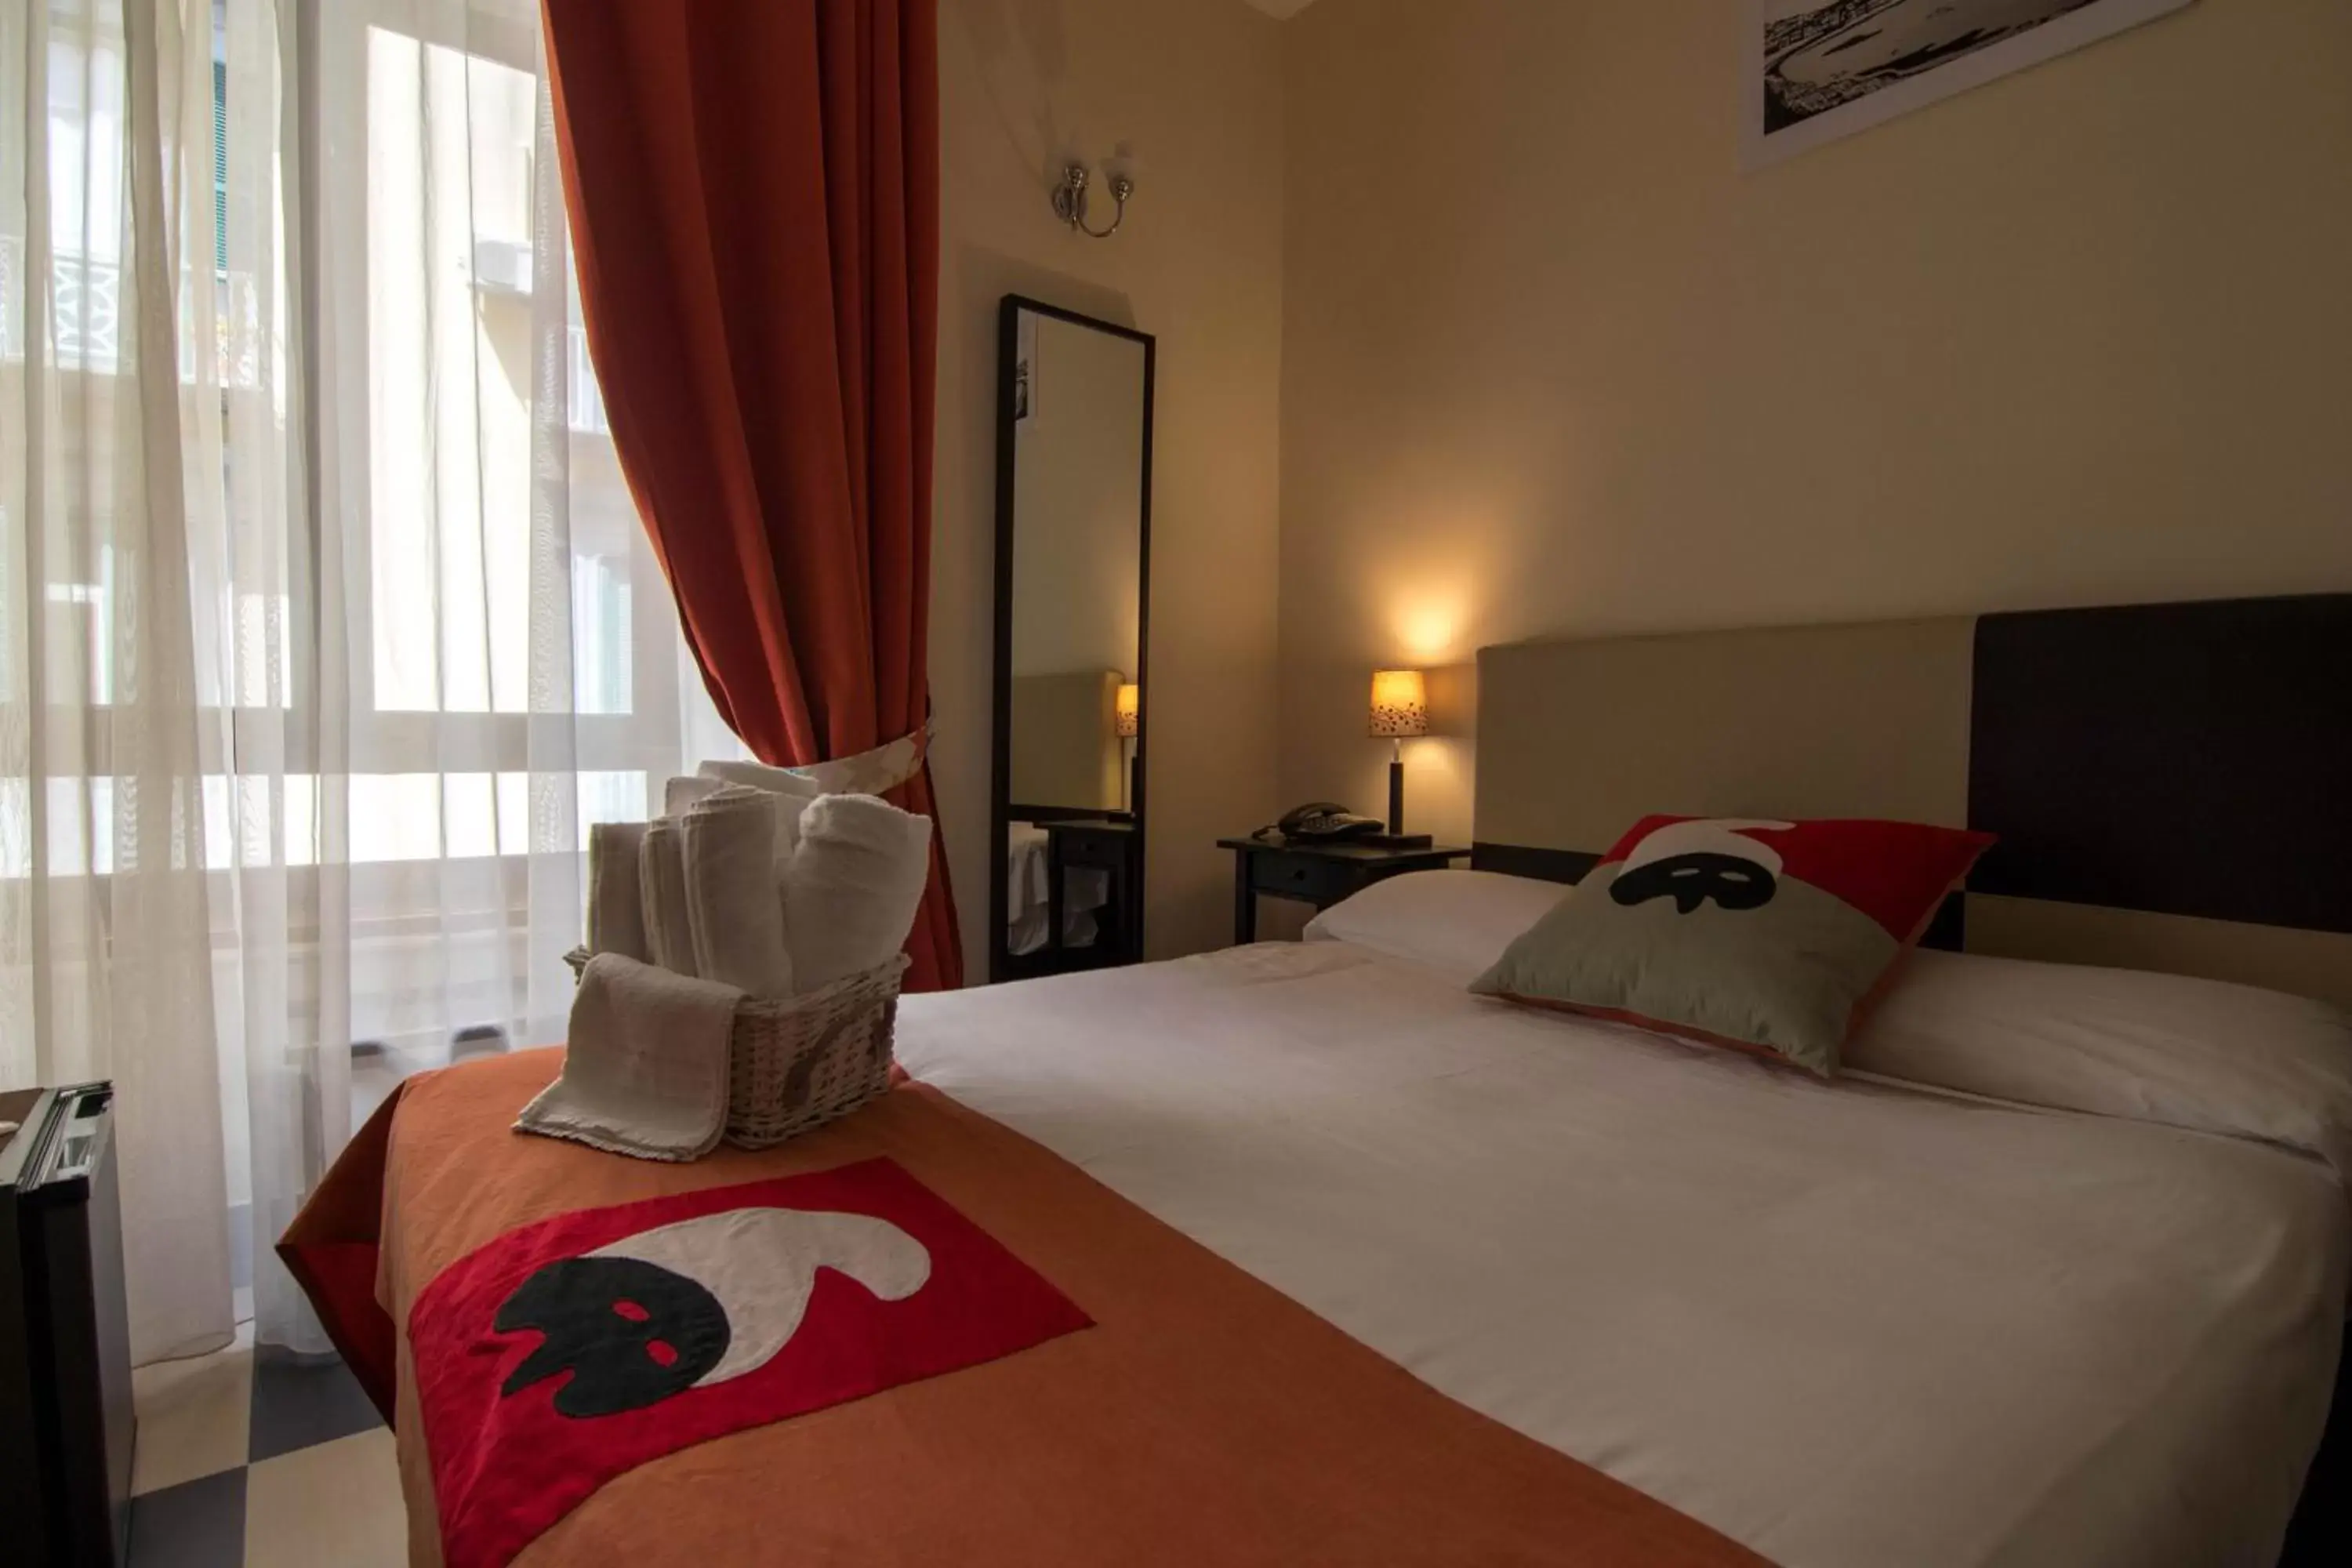 Bedroom in Hotel Plebiscito Aparthotel